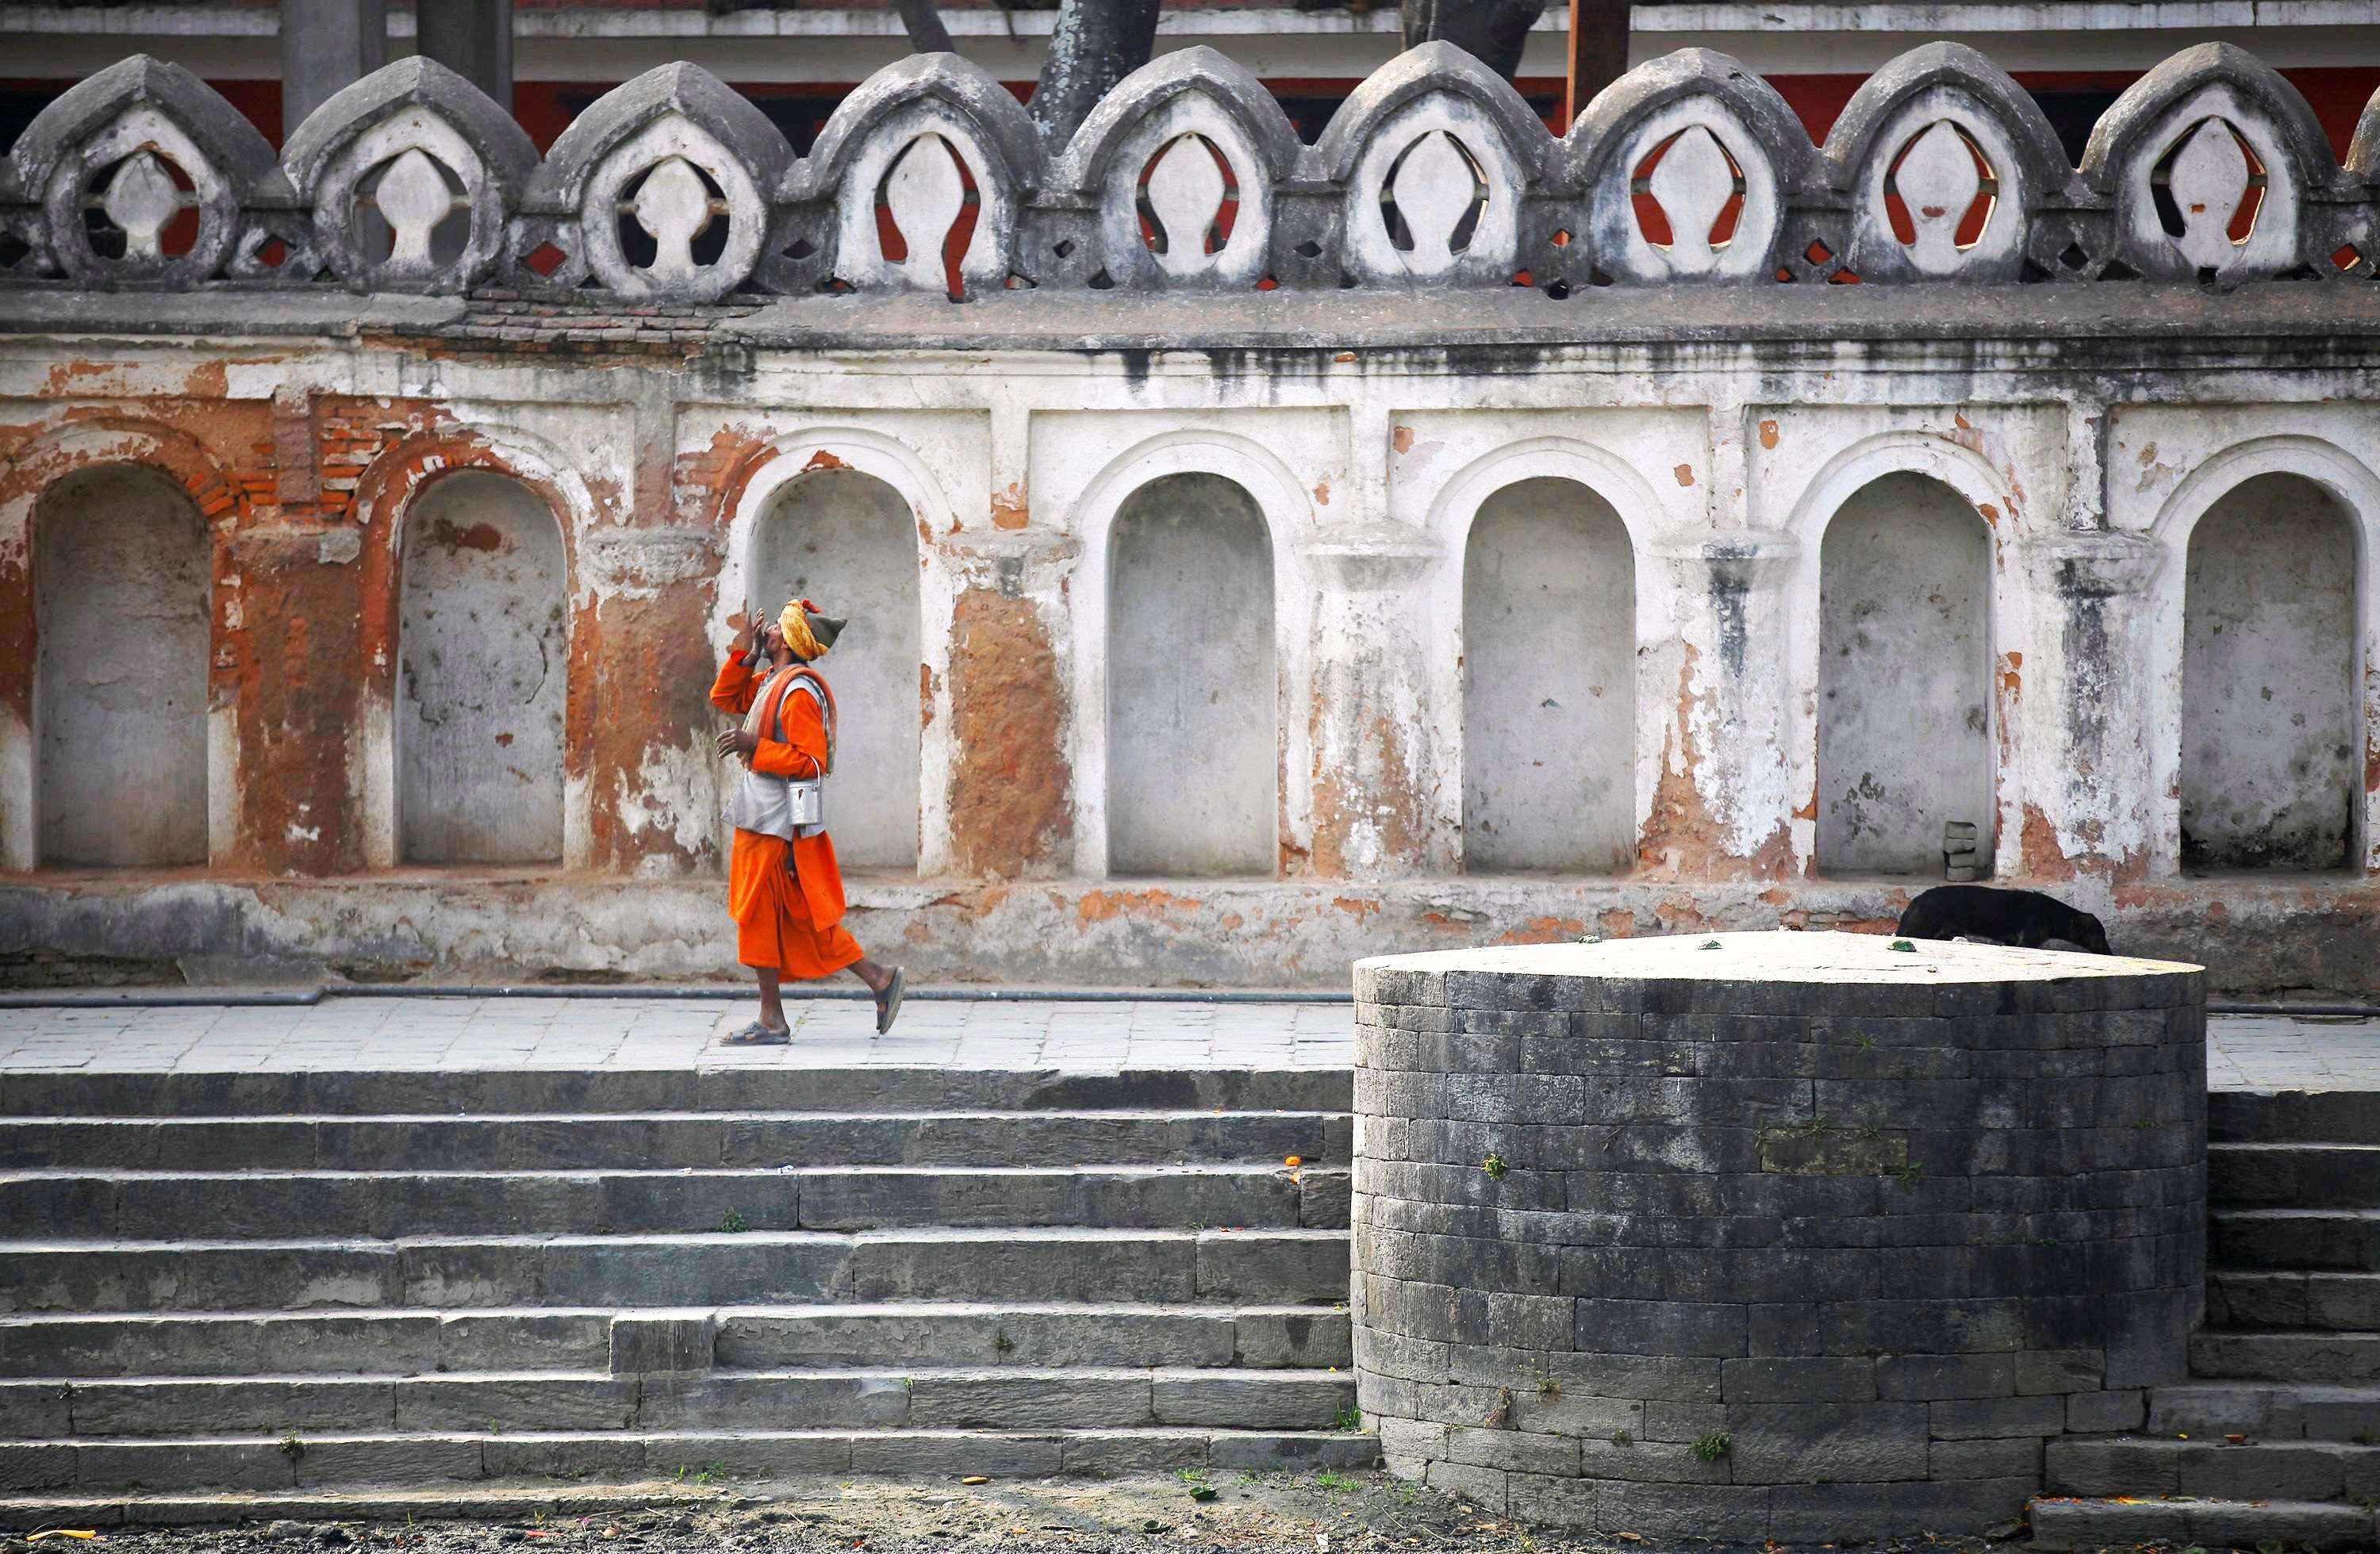 A sadhu walks along the premises of Pashupatinath Temple in Kathmandu. (REUTERS/Navesh Chitrakar)